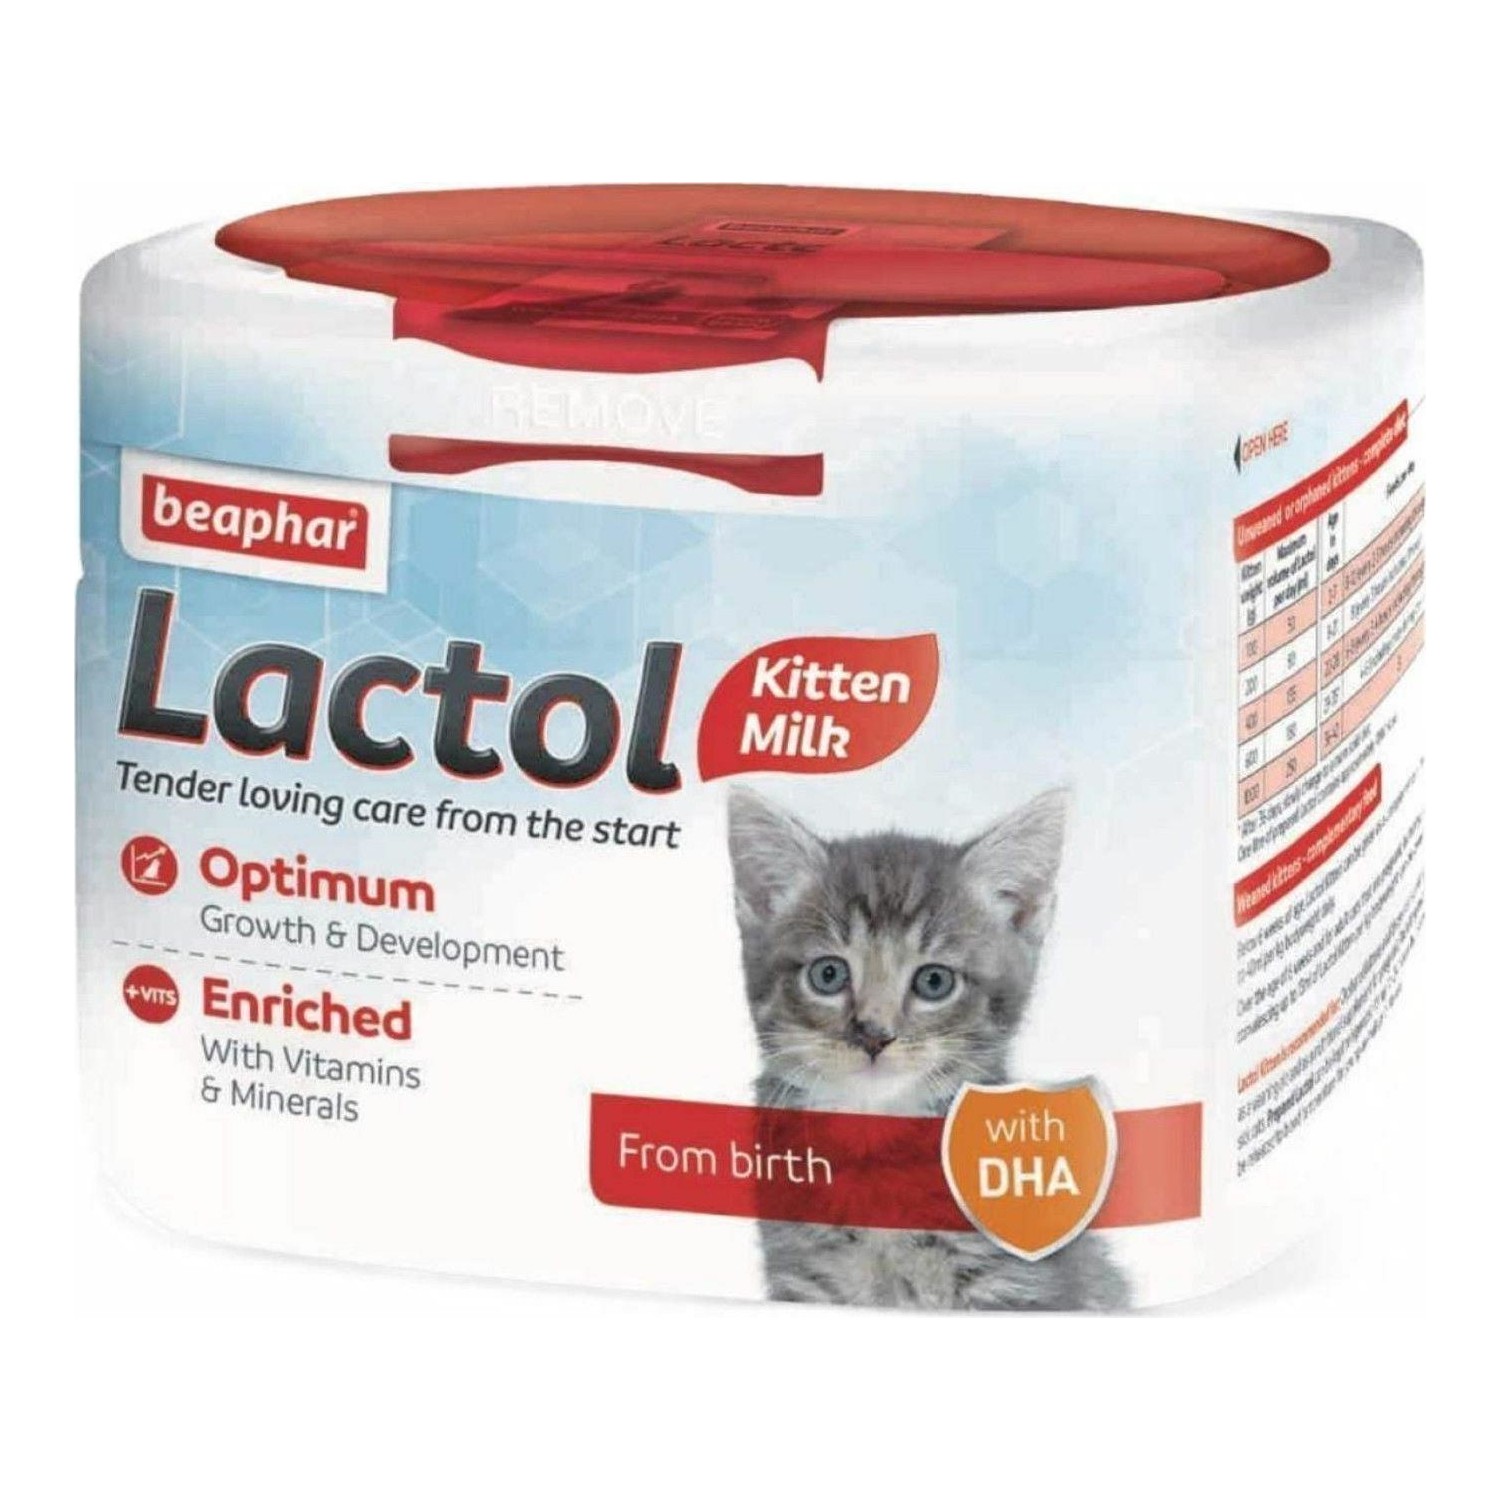 Beaphar Lactol Cat Yavru Kedi Süt Tozu 250 g Fiyatı